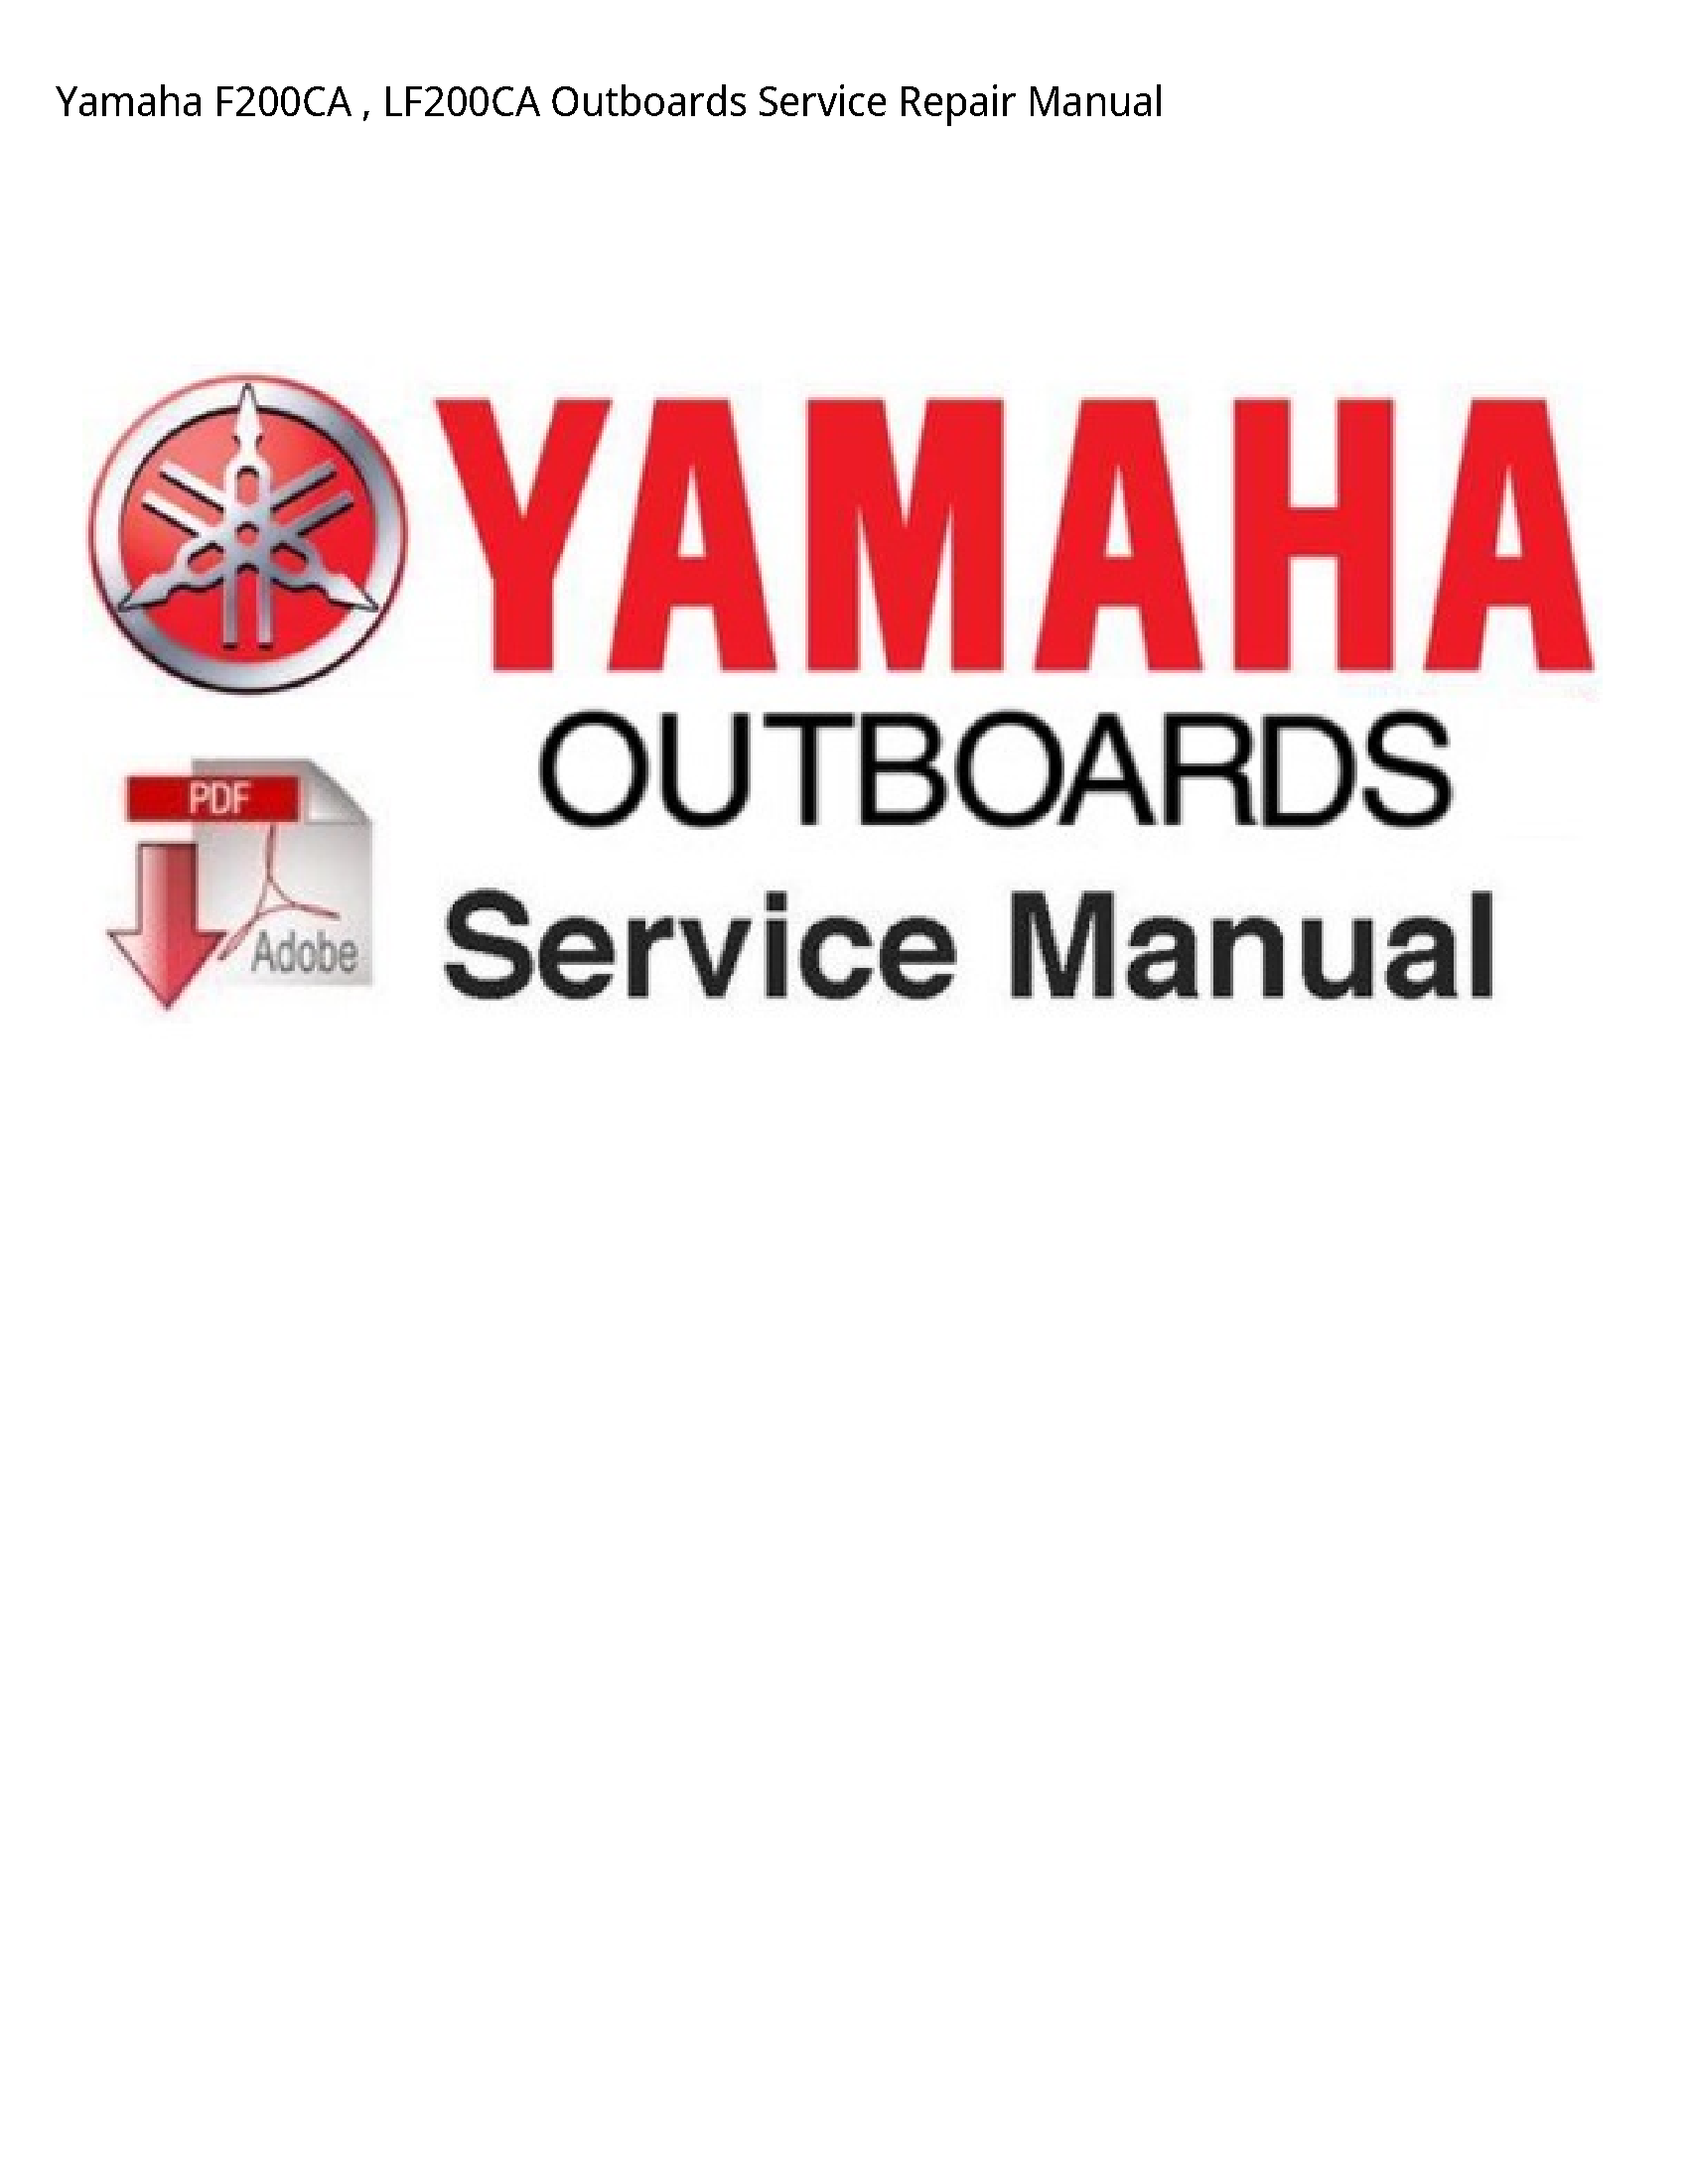 Yamaha F200CA Outboards manual